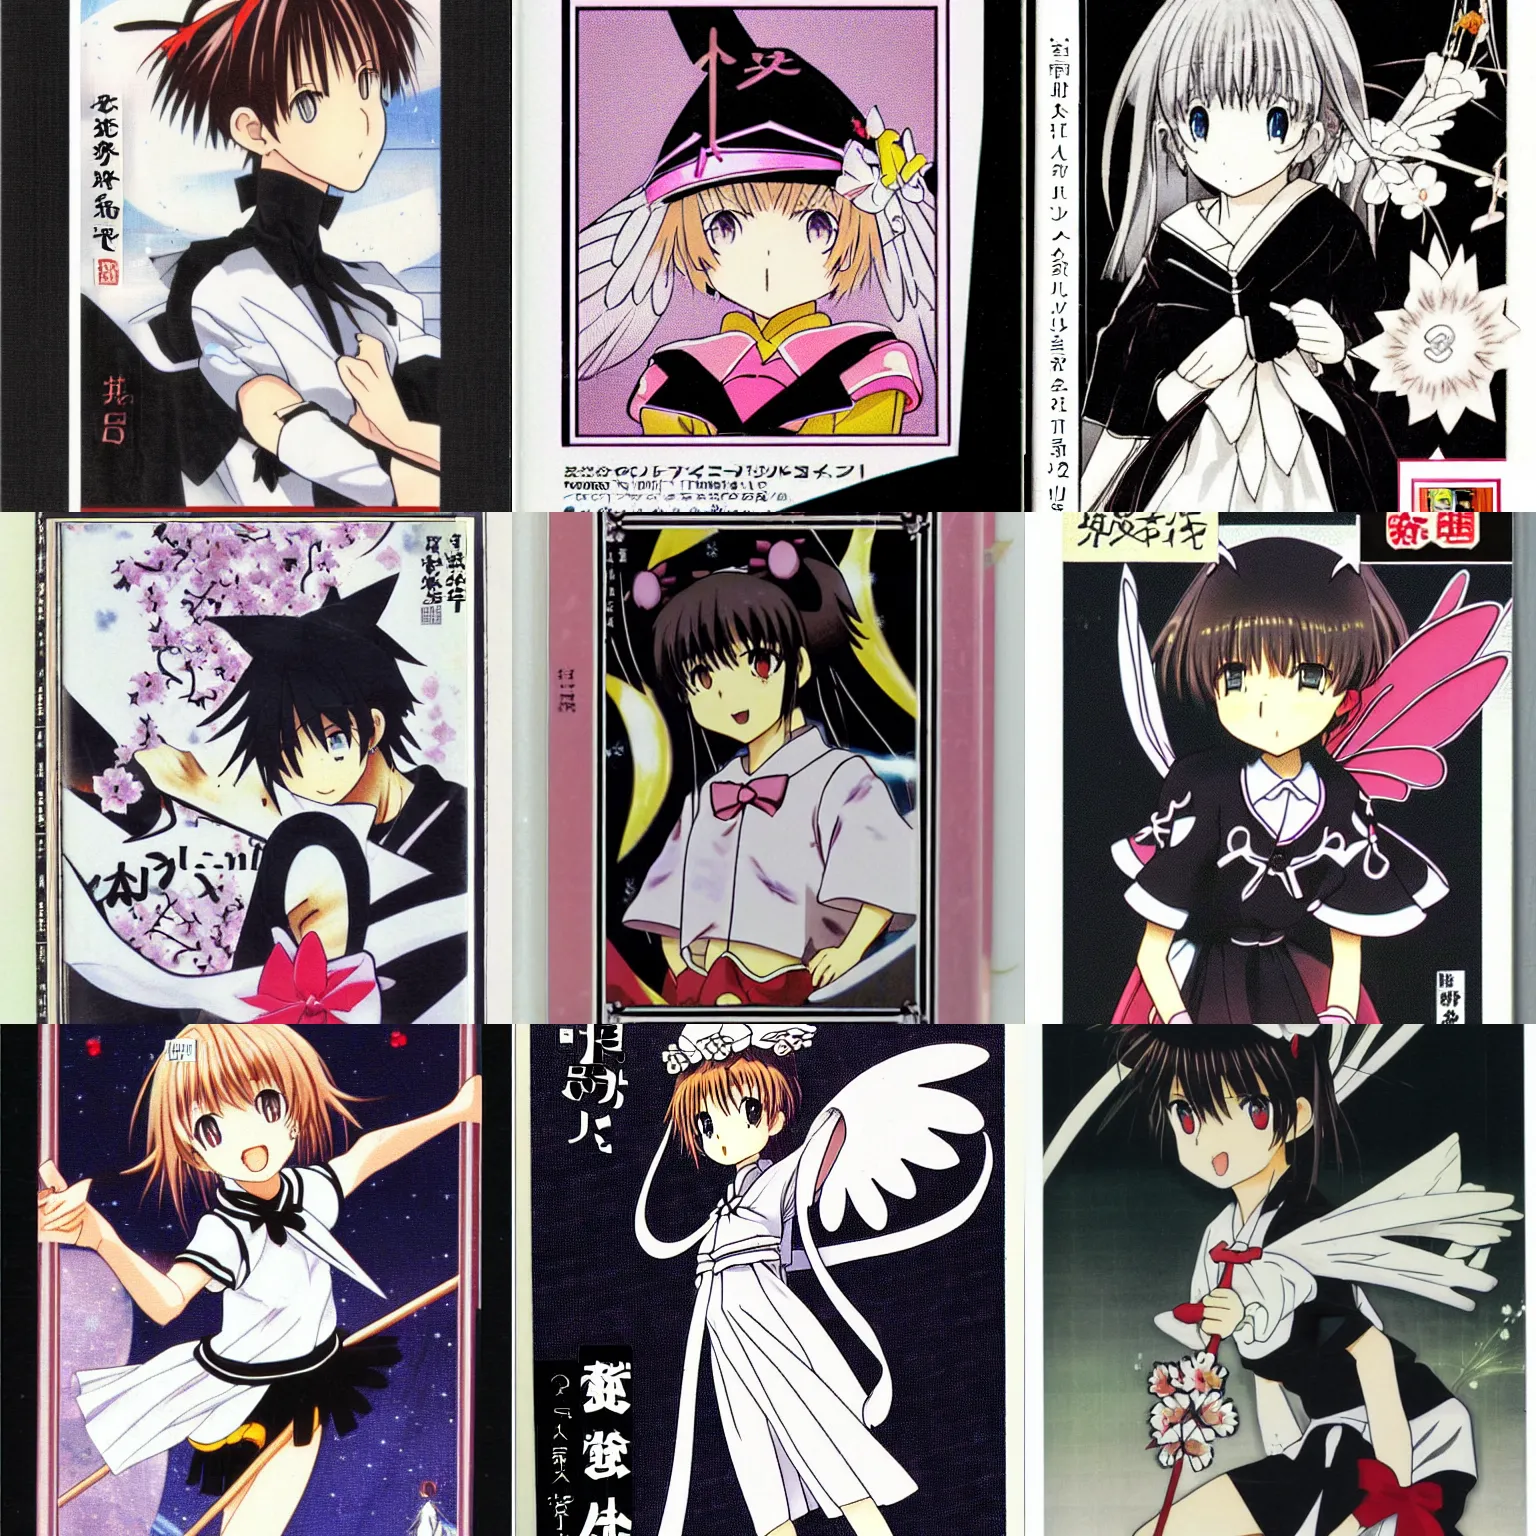 Prompt: sakura card captor, mysterious x, front cover, black and white, riichi ueshiba